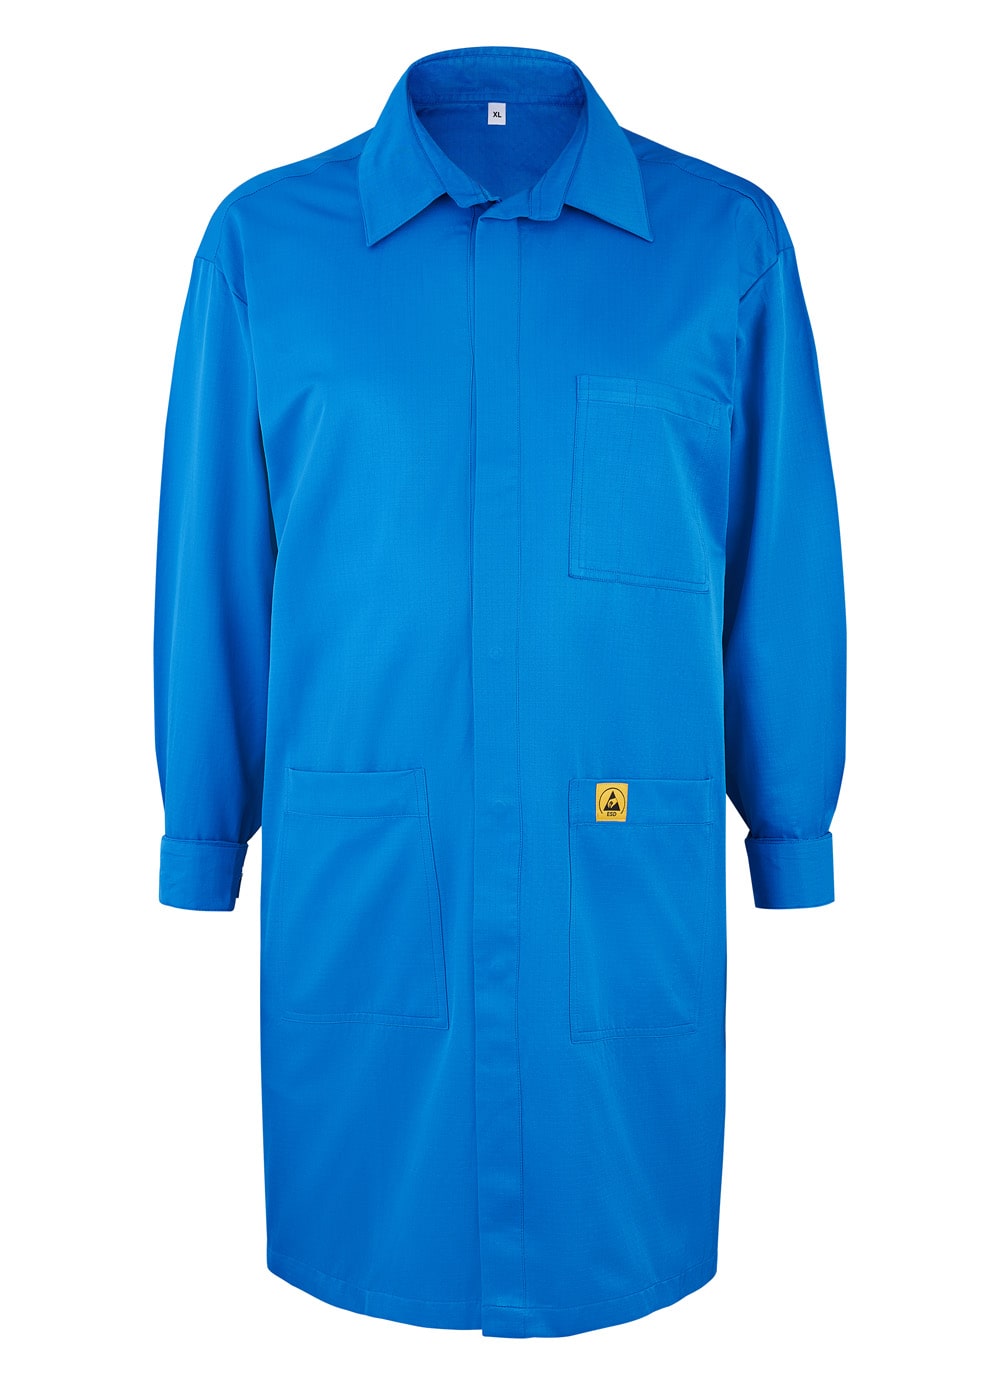 Photo of a royal blue labcoat, a full size packshot photo for web shop